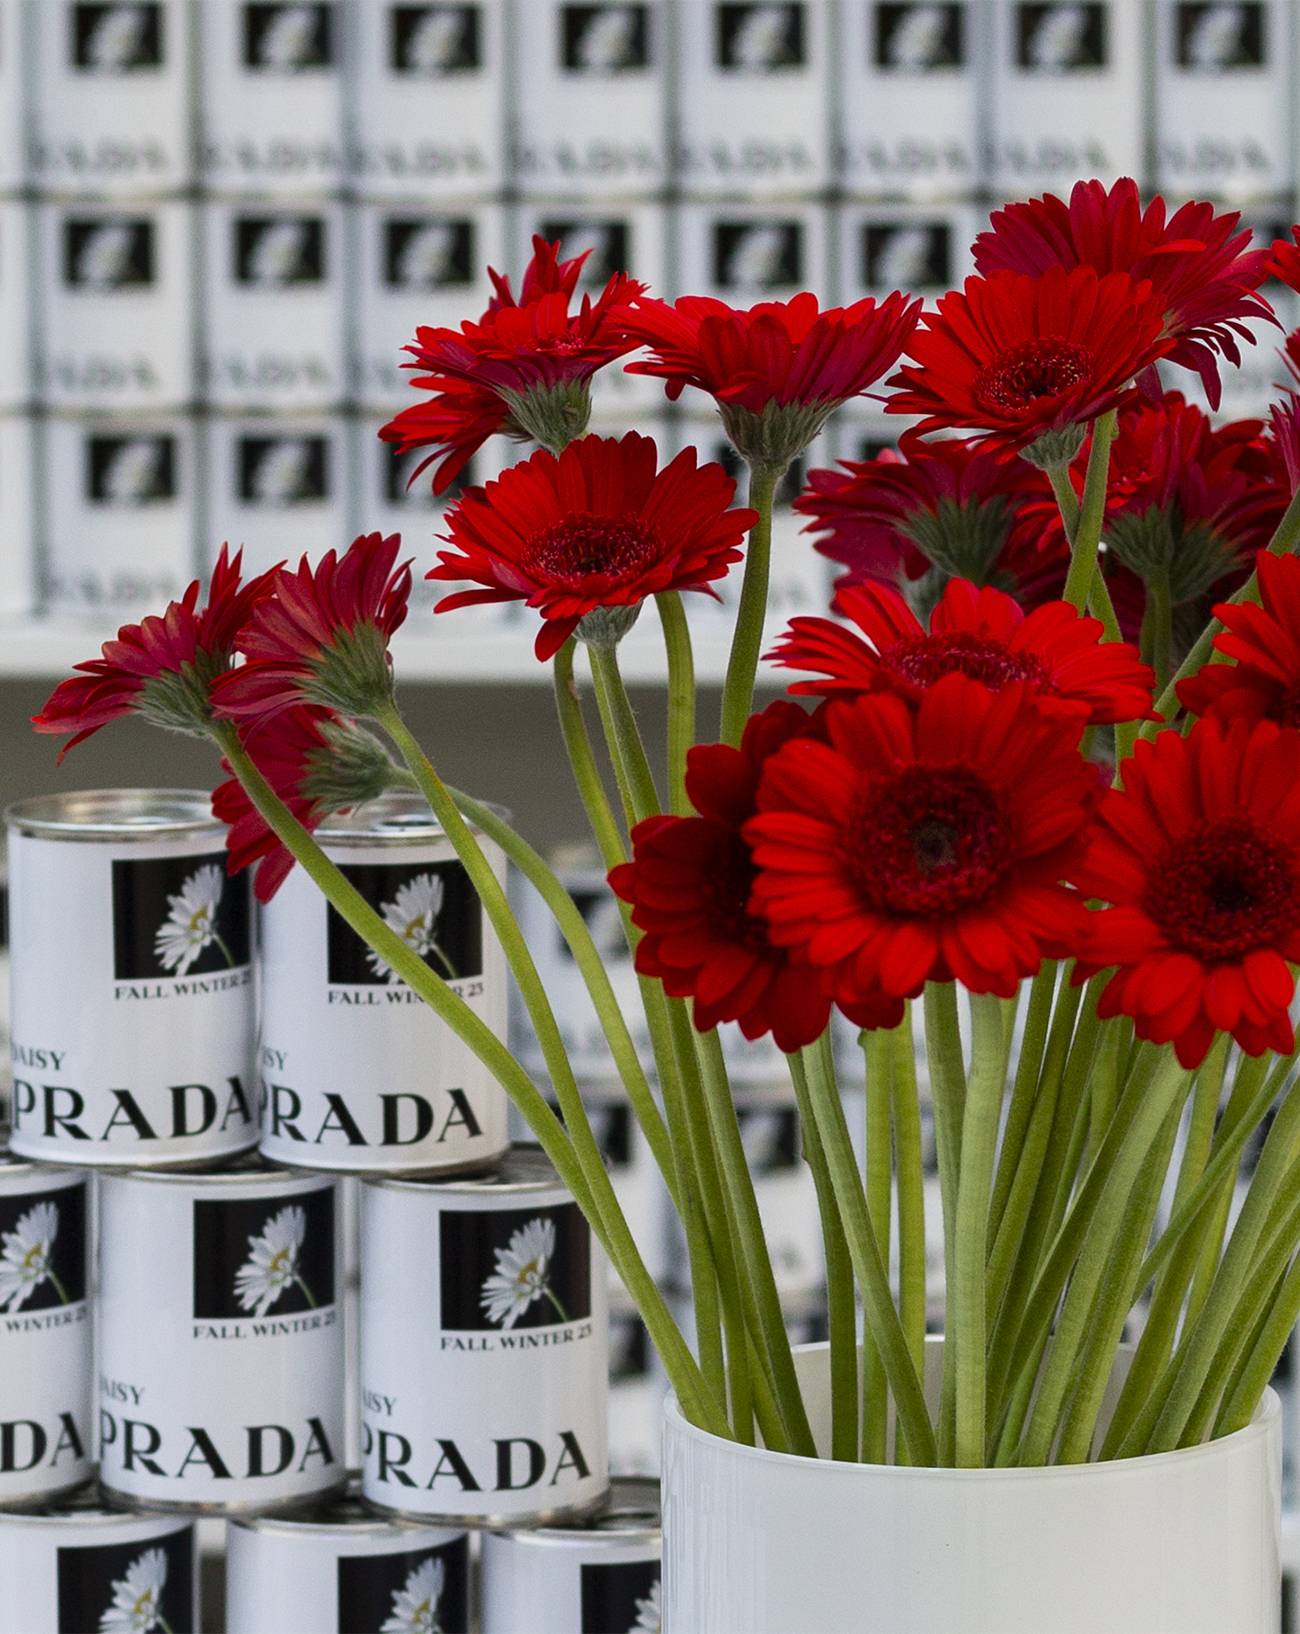 De Paris à Tokyo, Prada invite à planter des fleurs